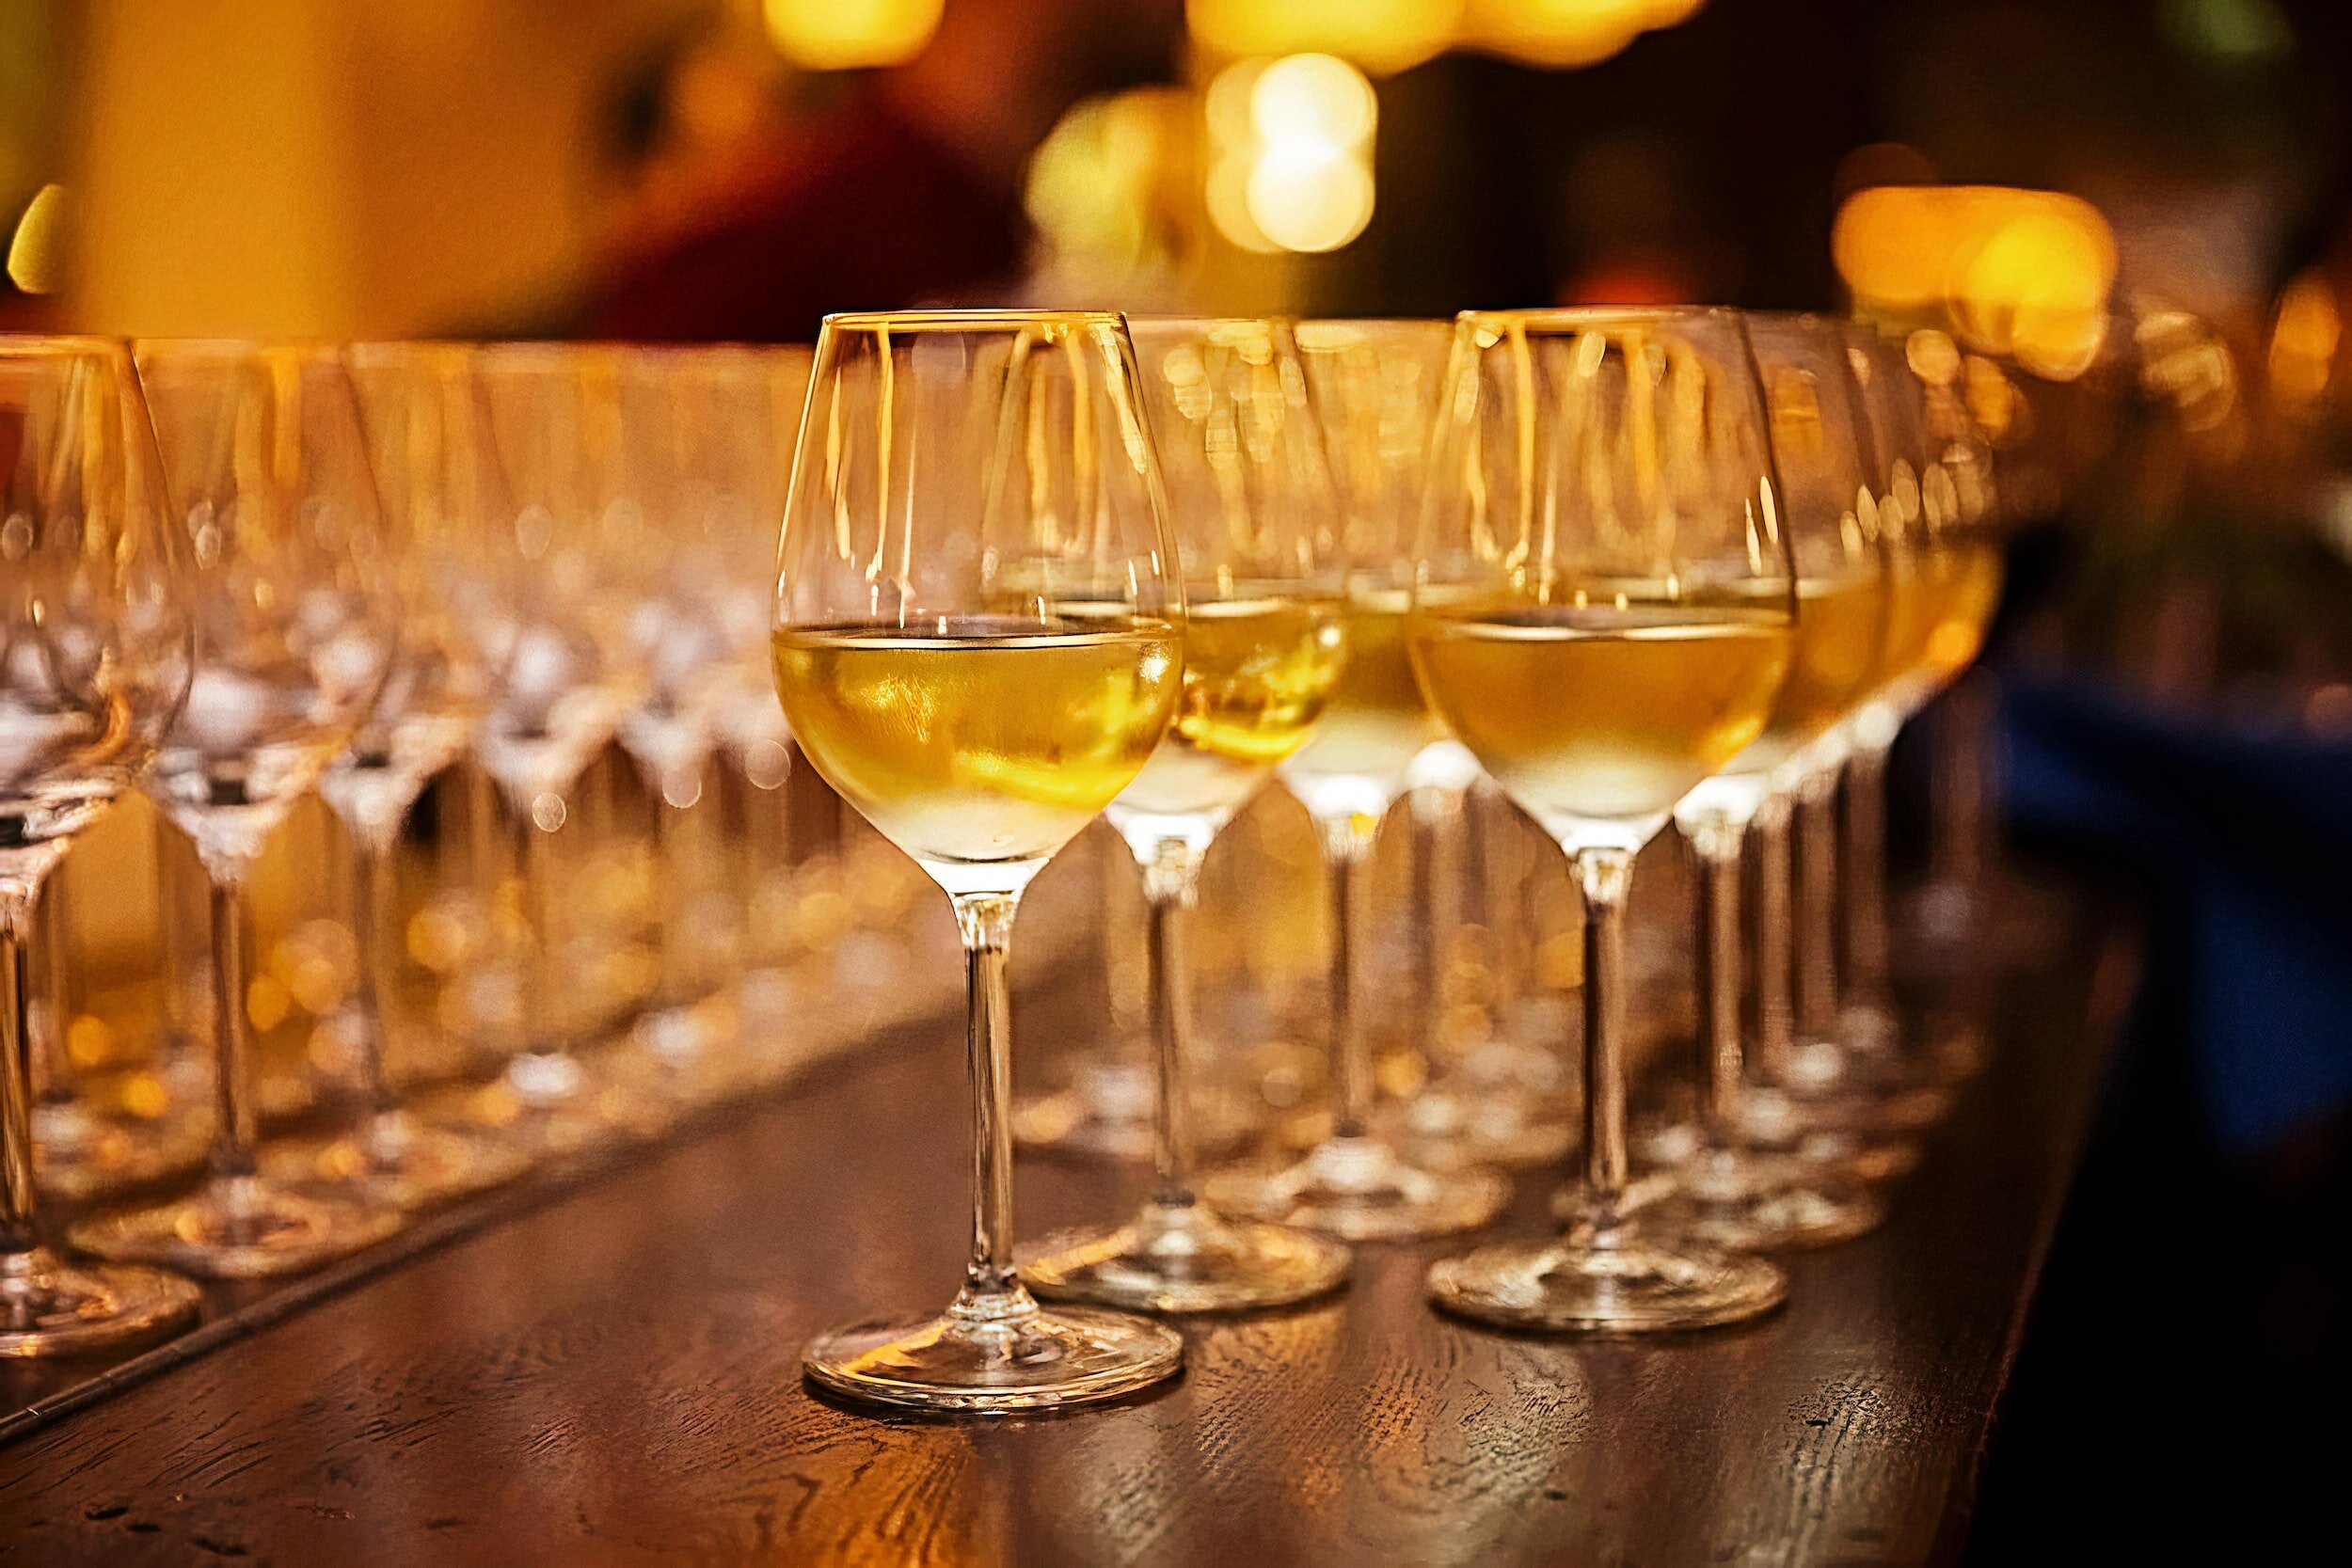 bitterness in white - white wine glasses